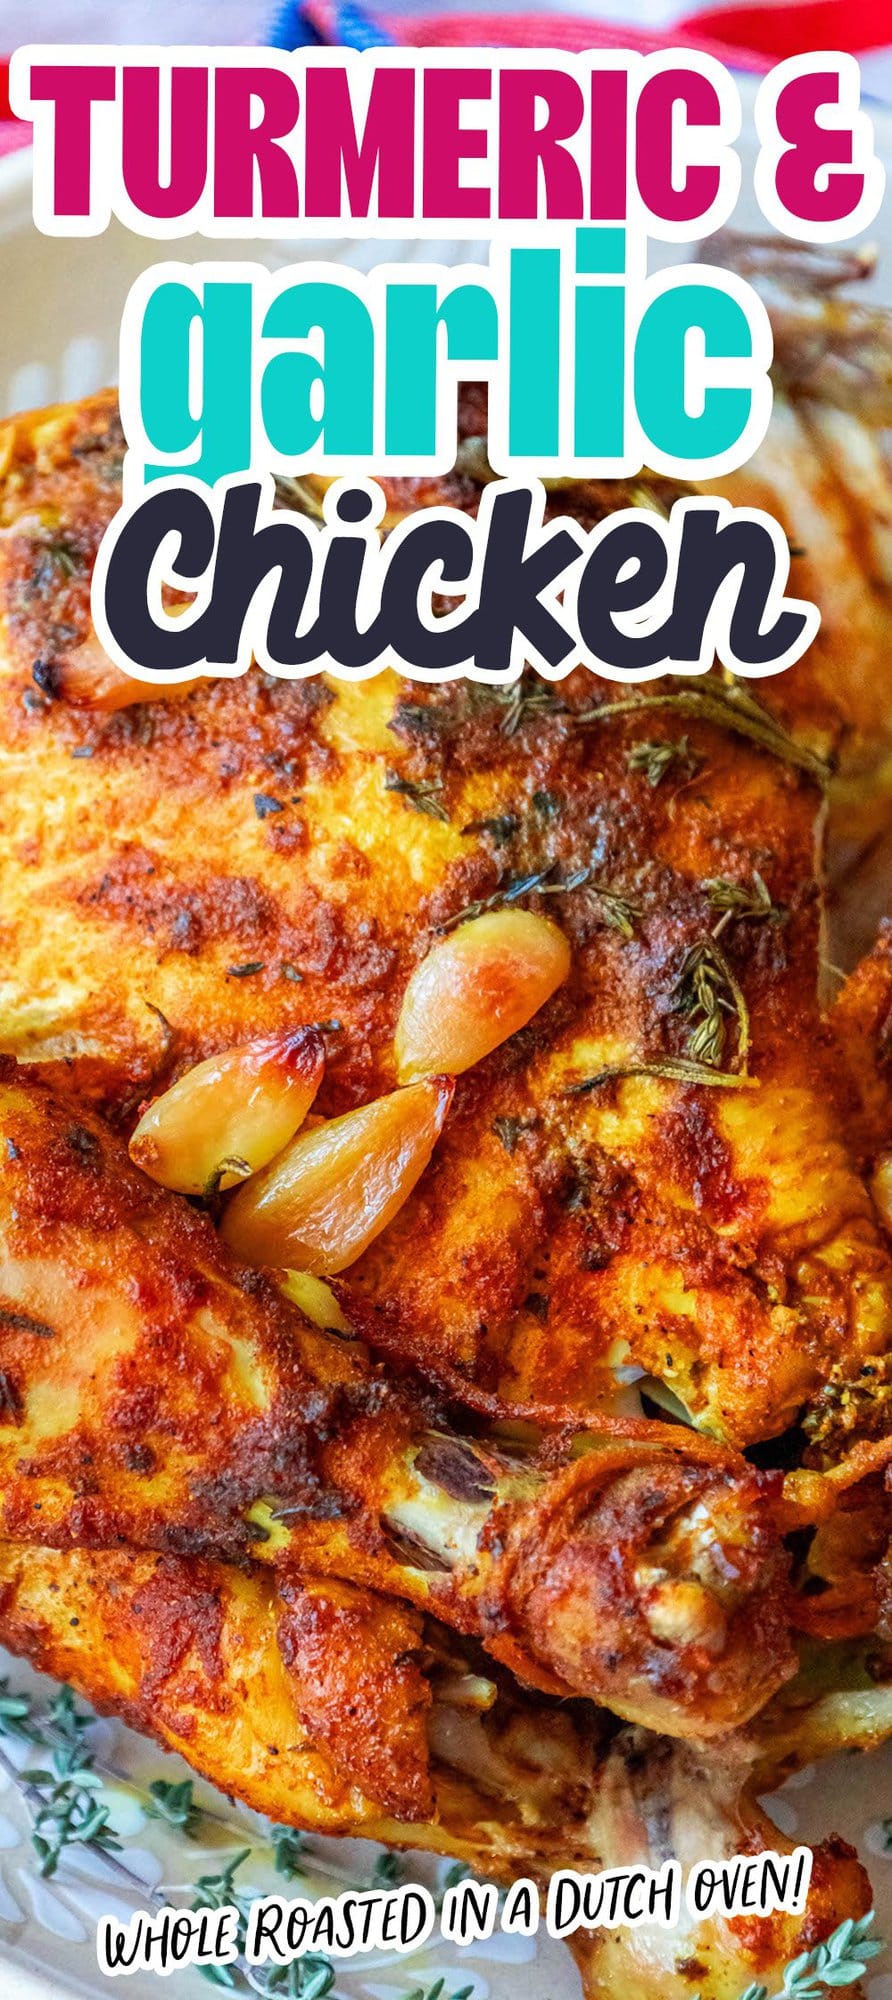 roasted chicken with garlic turmeric rub on a dish